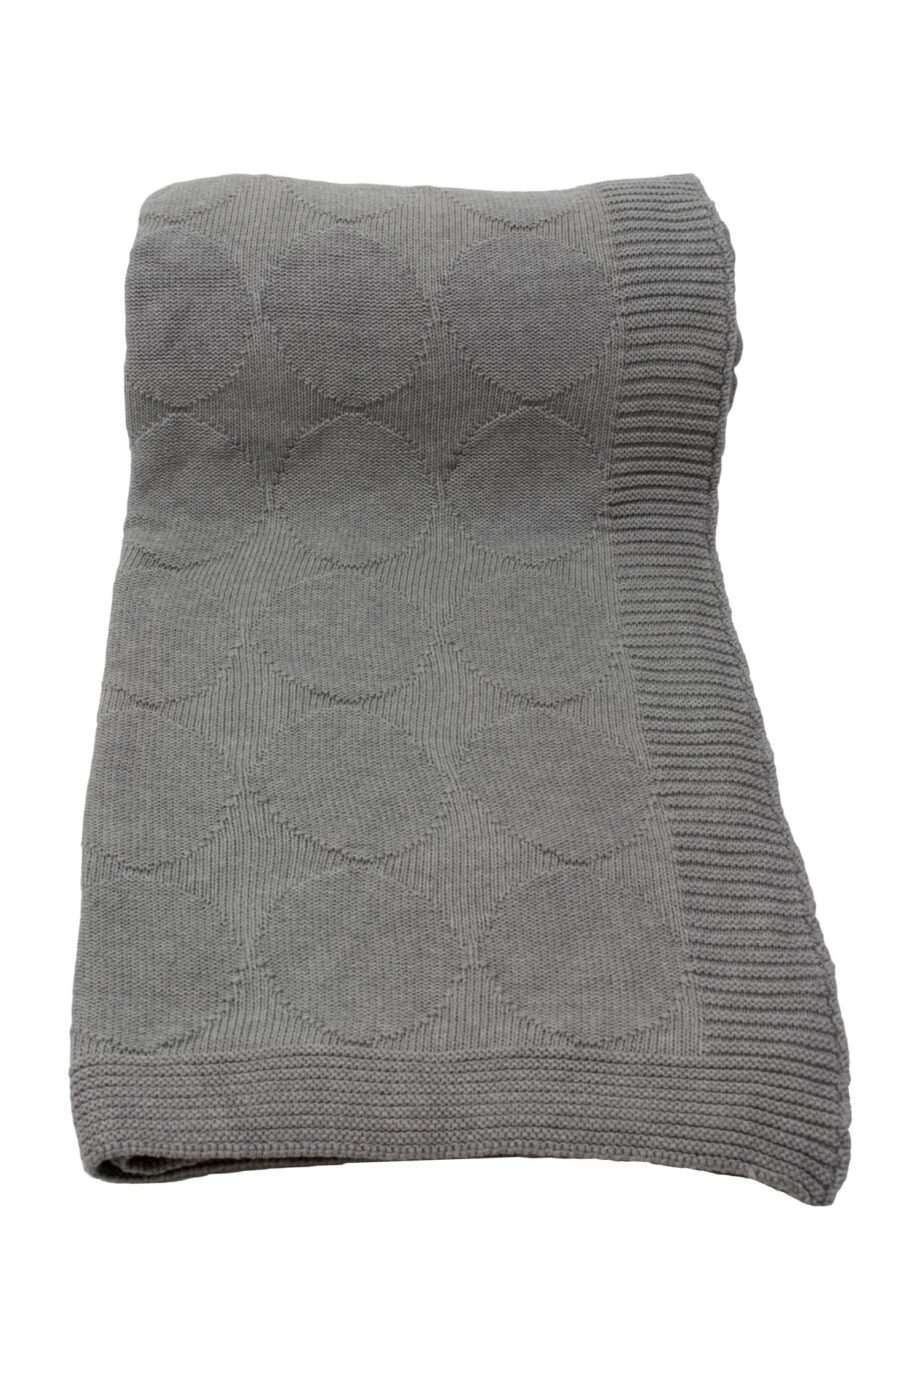 spots grey knitted cotton plaid medium